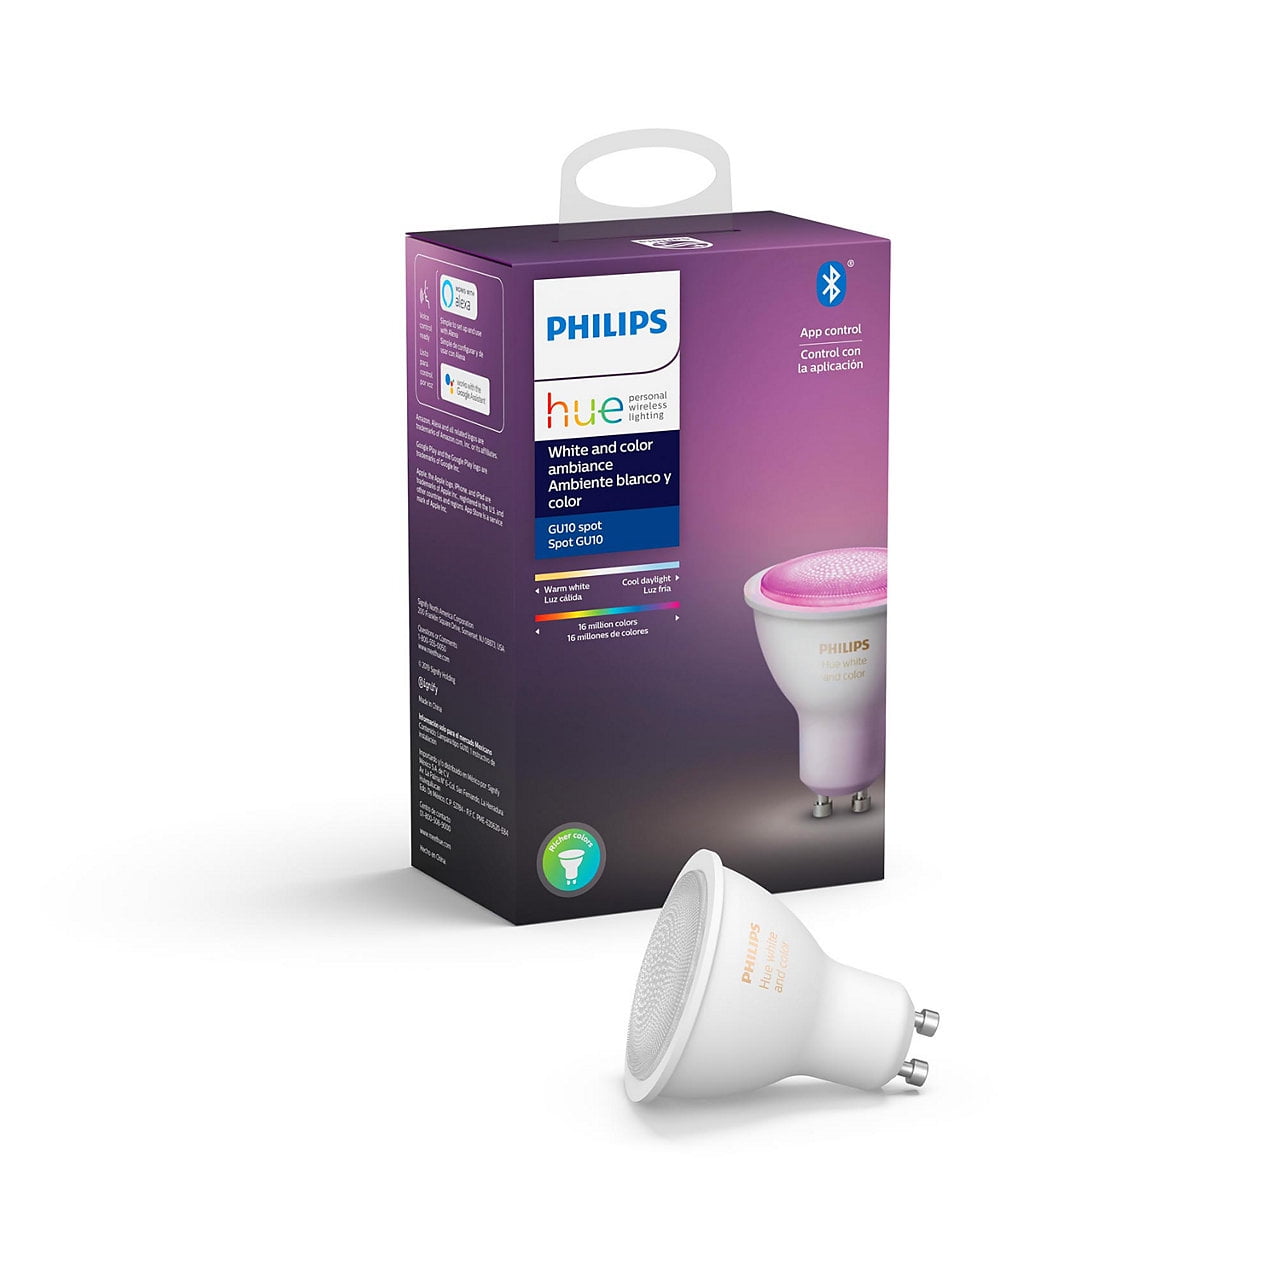 repertoire soft microscopic Philips Hue White and Color Ambiance GU10 Bluetooth Smart LED Bulb -  Walmart.com